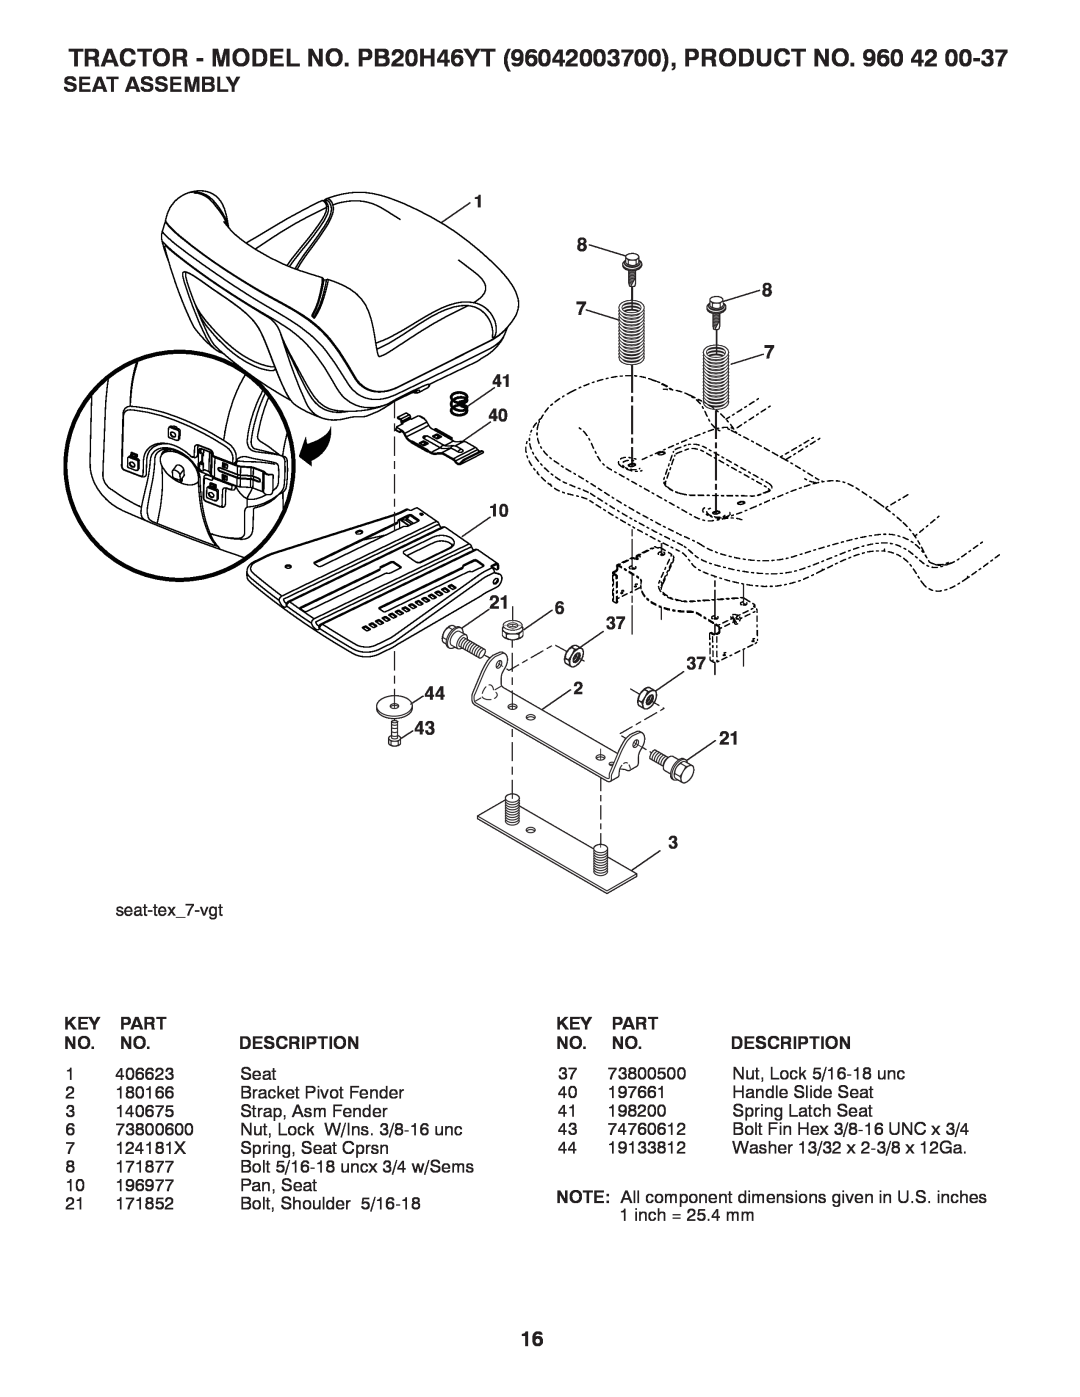 Poulan manual Seat Assembly, TRACTOR - MODEL NO. PB20H46YT 96042003700, PRODUCT NO. 960 42, Part, Description 